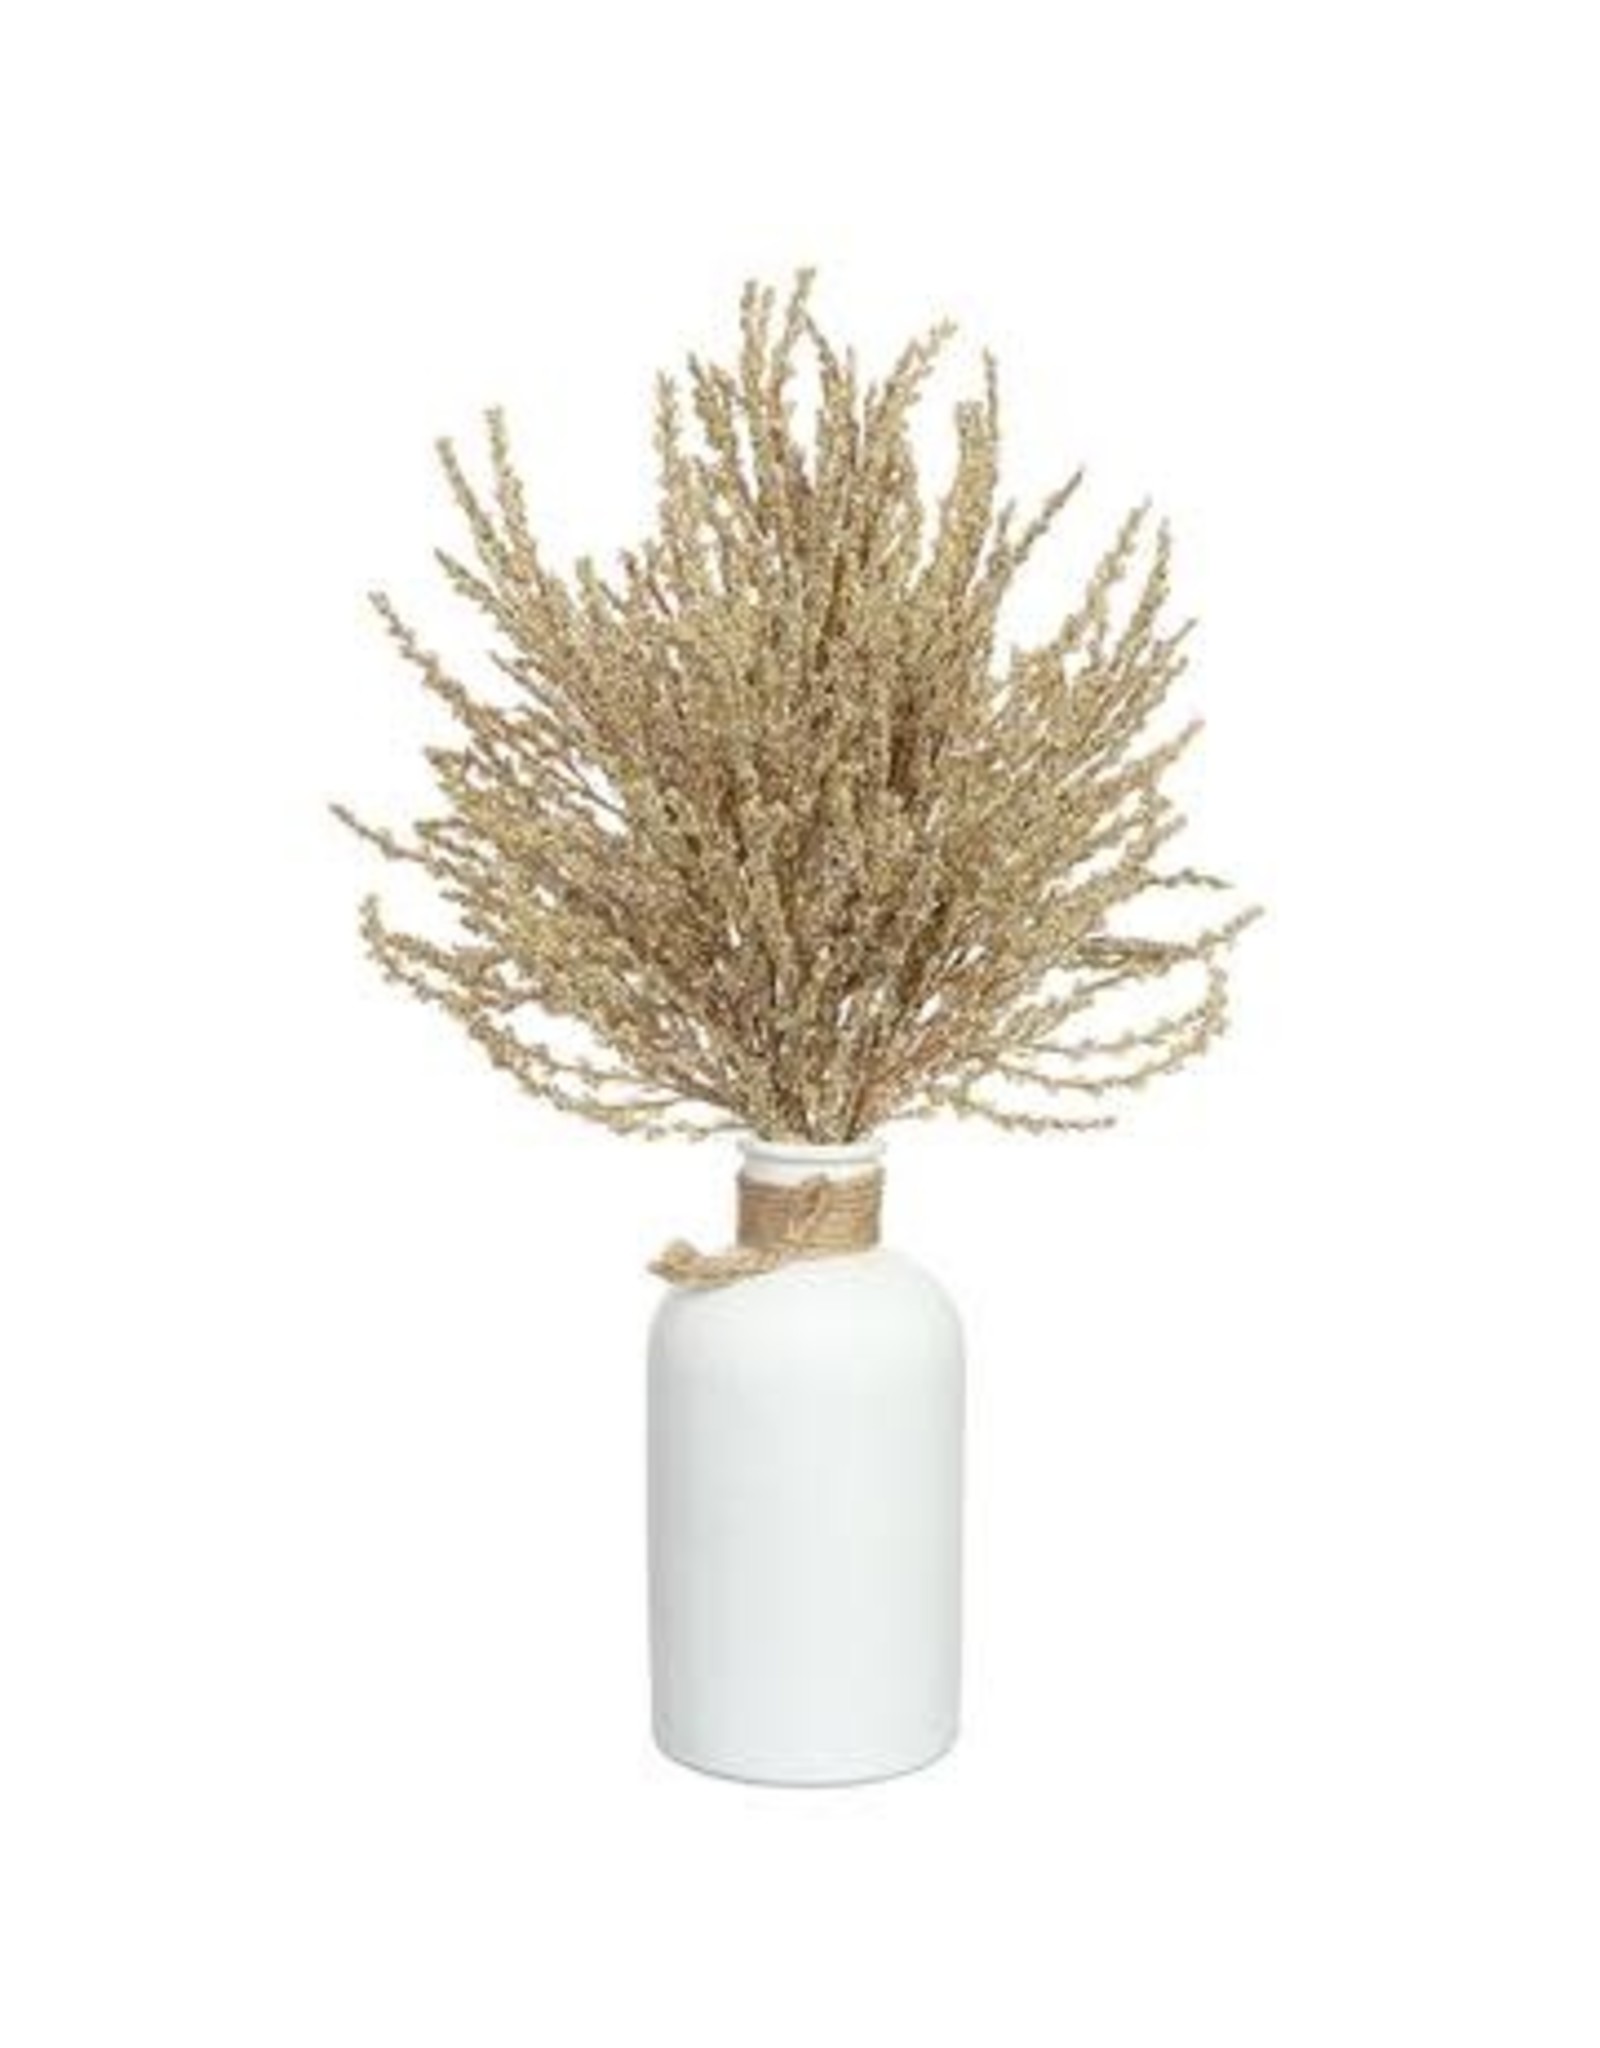 LFG244 14.5" Plume Grass in Glass Vase